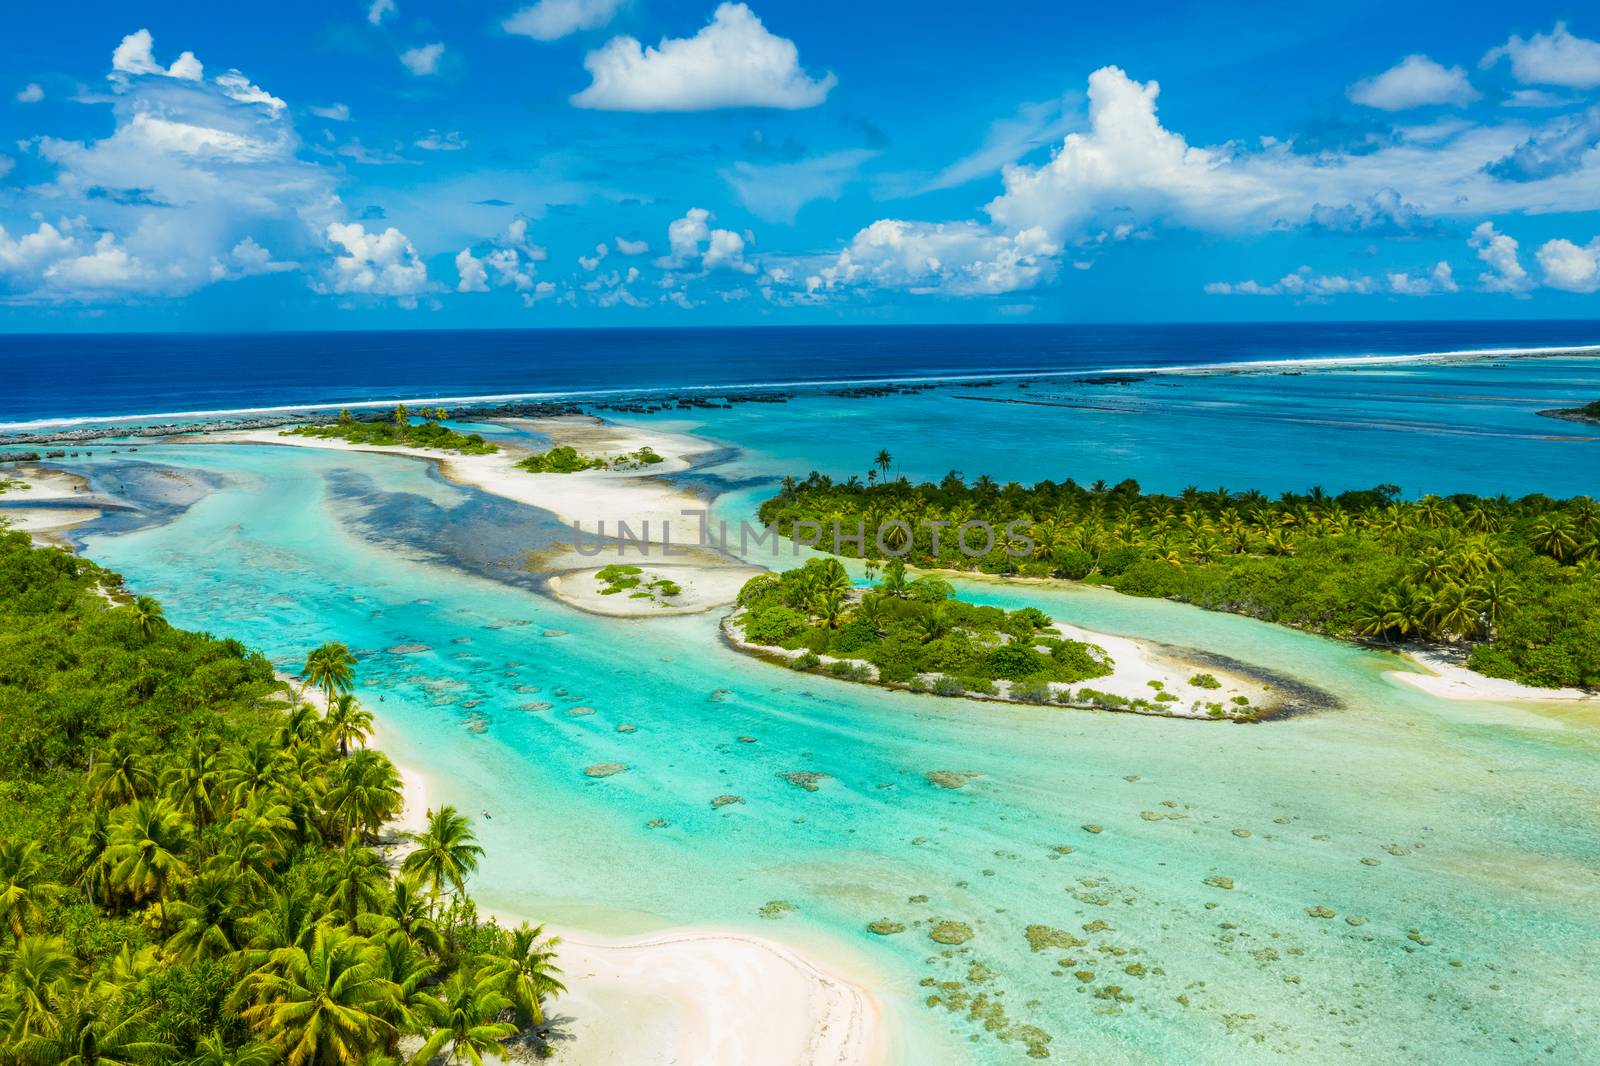 Rangiroa aerial image of atoll island reef motu in French Polynesia Tahiti by Maridav